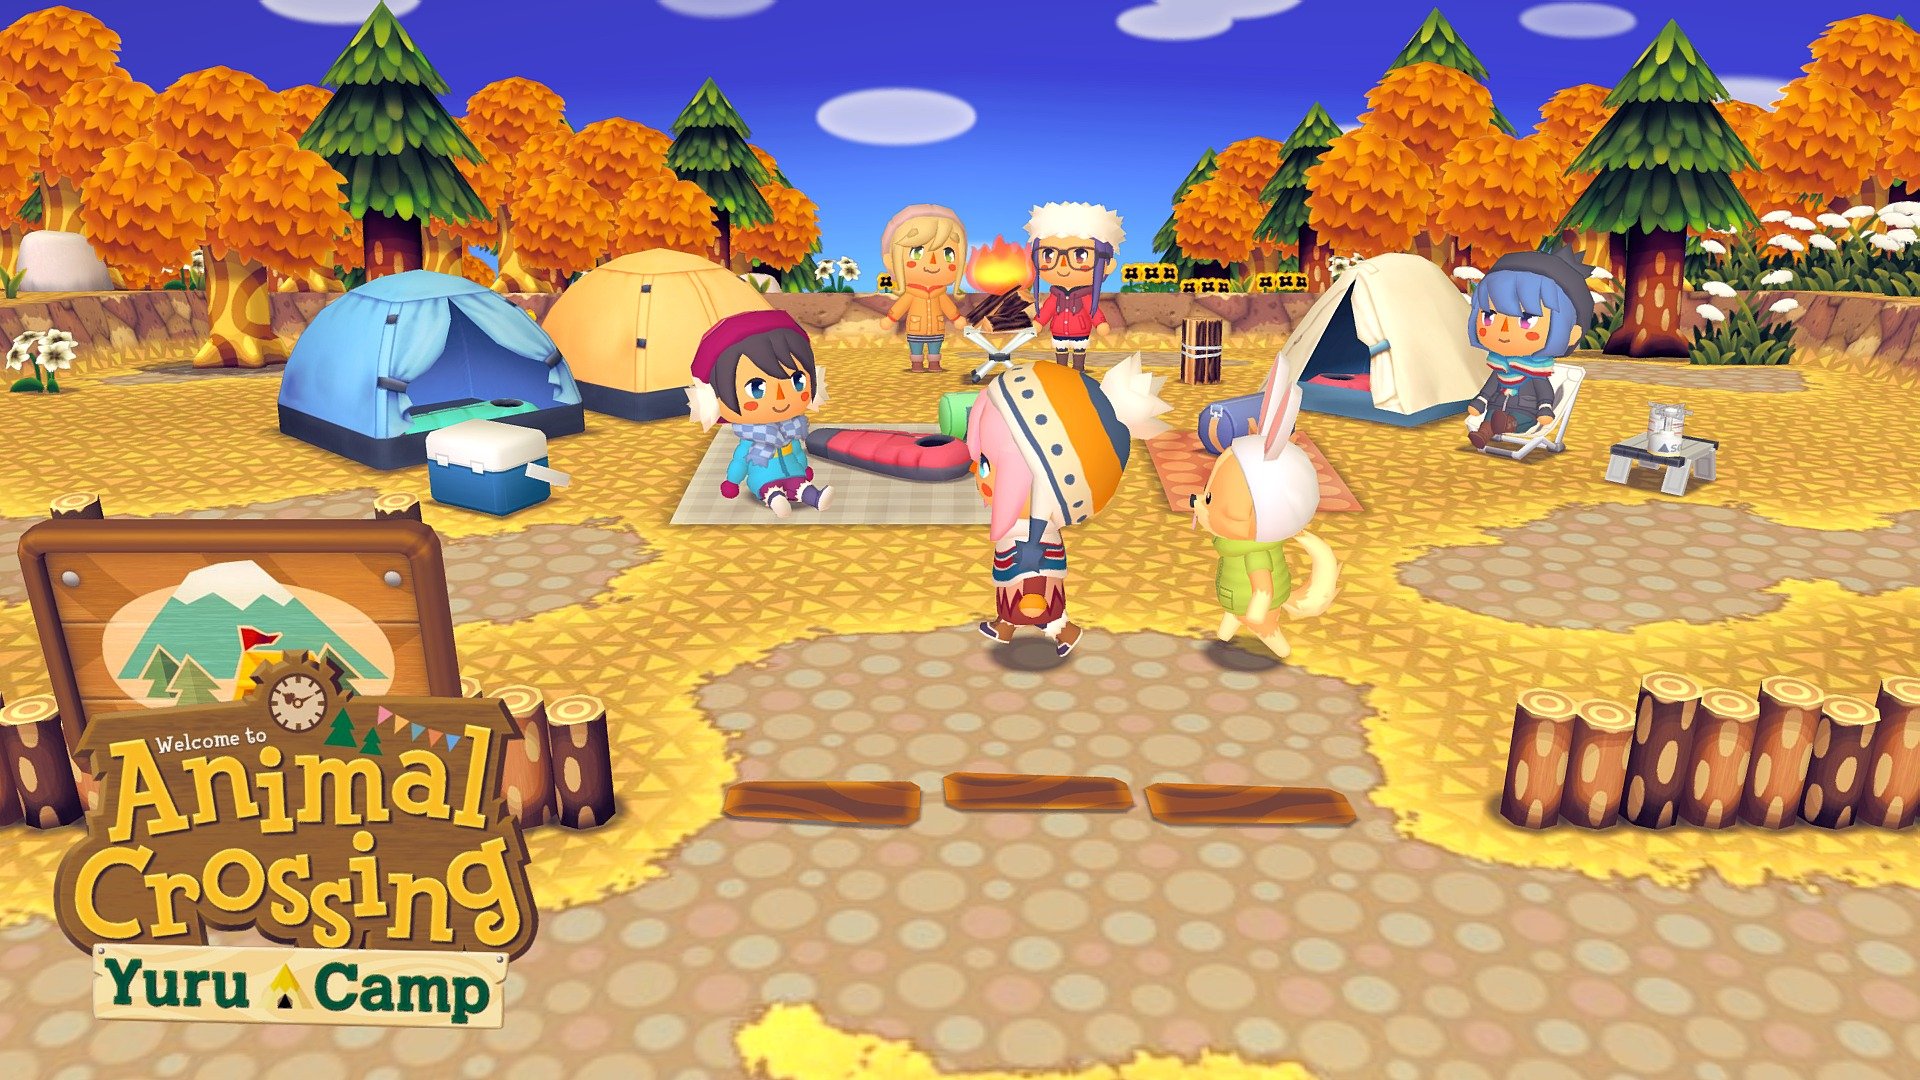 Music: Akiyuki Tateyama

Twitter thread of making this scene - Animal Crossing: Yuru Camp - 3D model by andmish 3d model